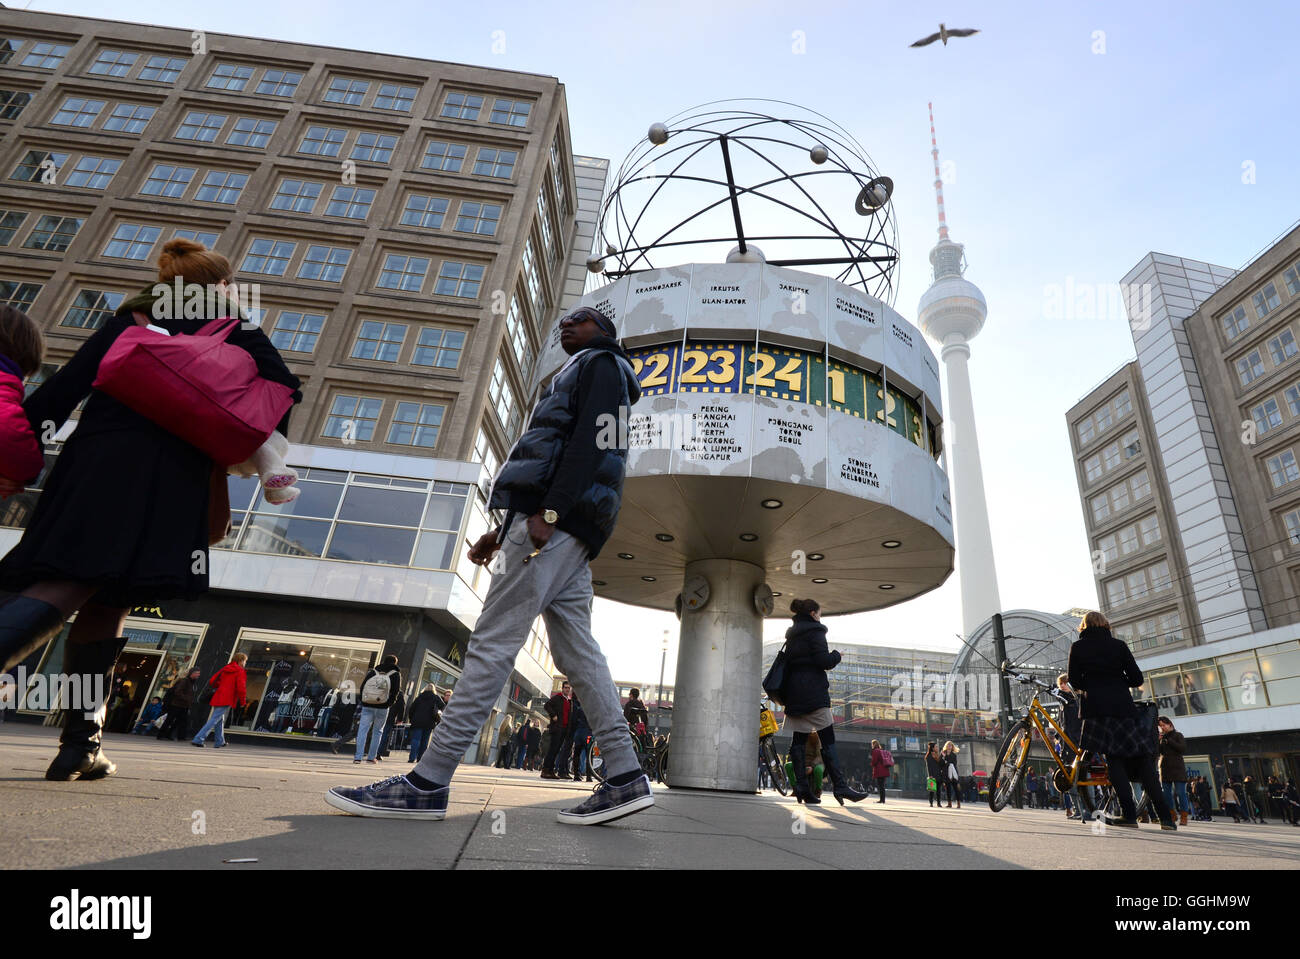 World time clock on Alexander square, Alexander Platz, Berlin, Germany  Stock Photo - Alamy